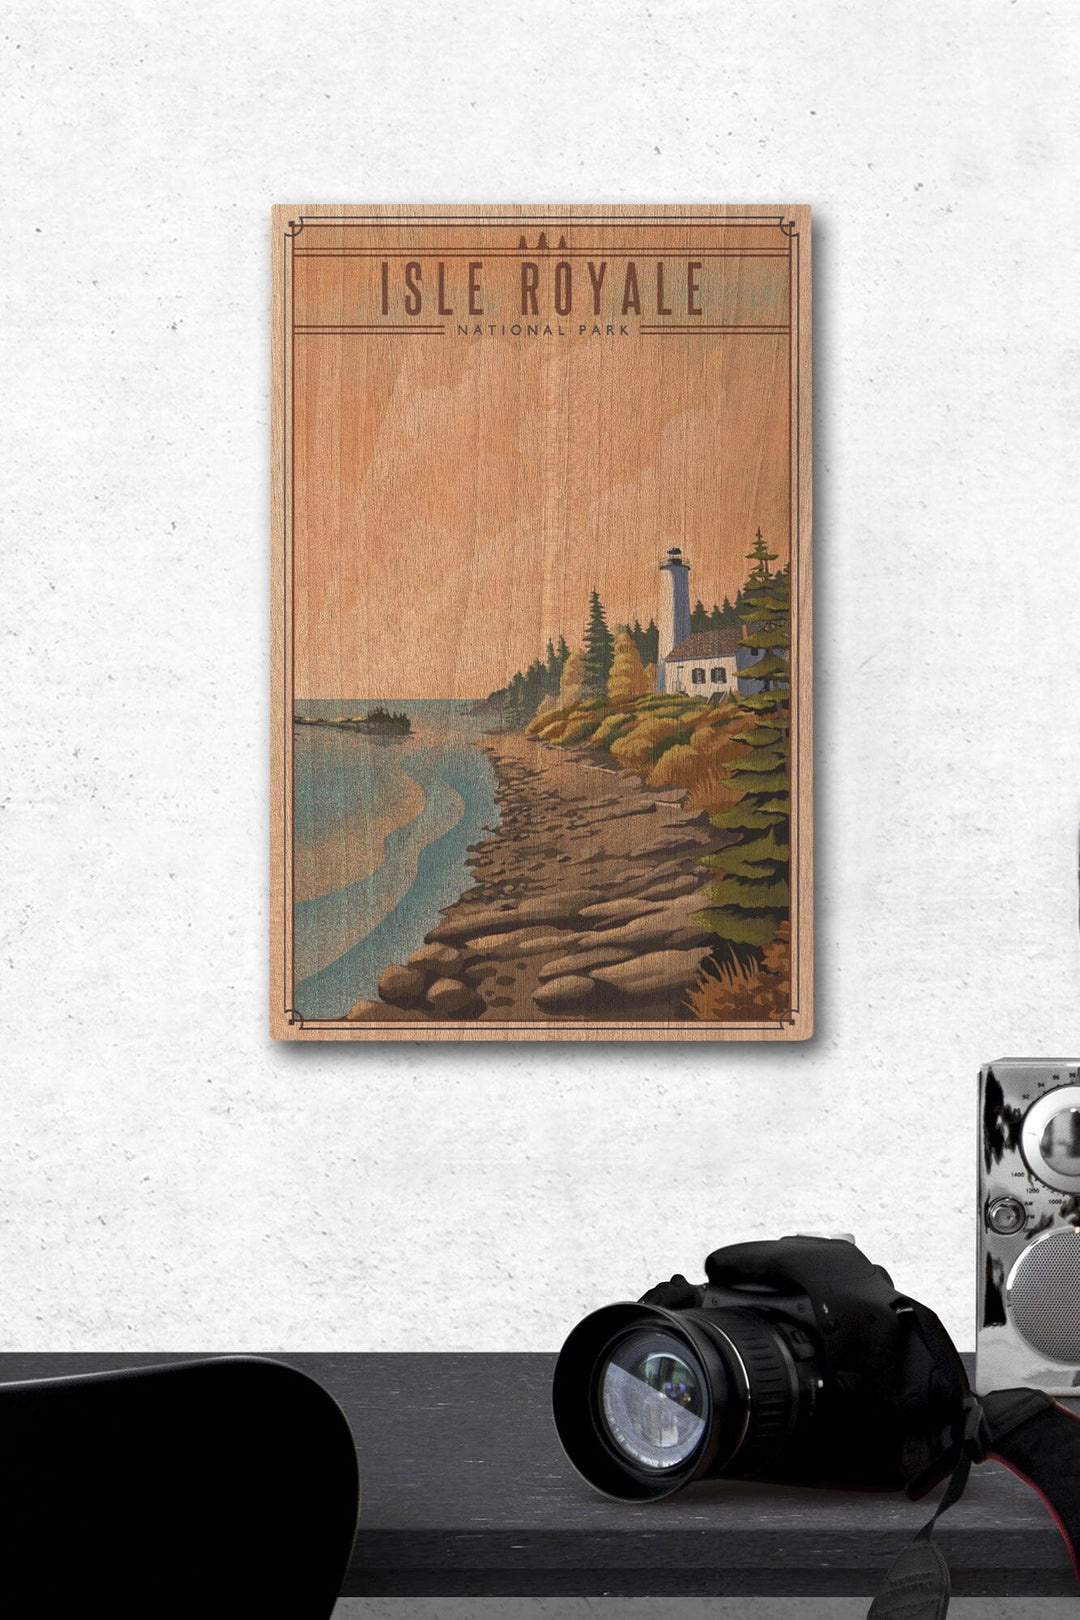 Isle Royale National Park, Michigan, Lithograph National Park Series, Lantern Press Artwork, Wood Signs and Postcards Wood Lantern Press 12 x 18 Wood Gallery Print 